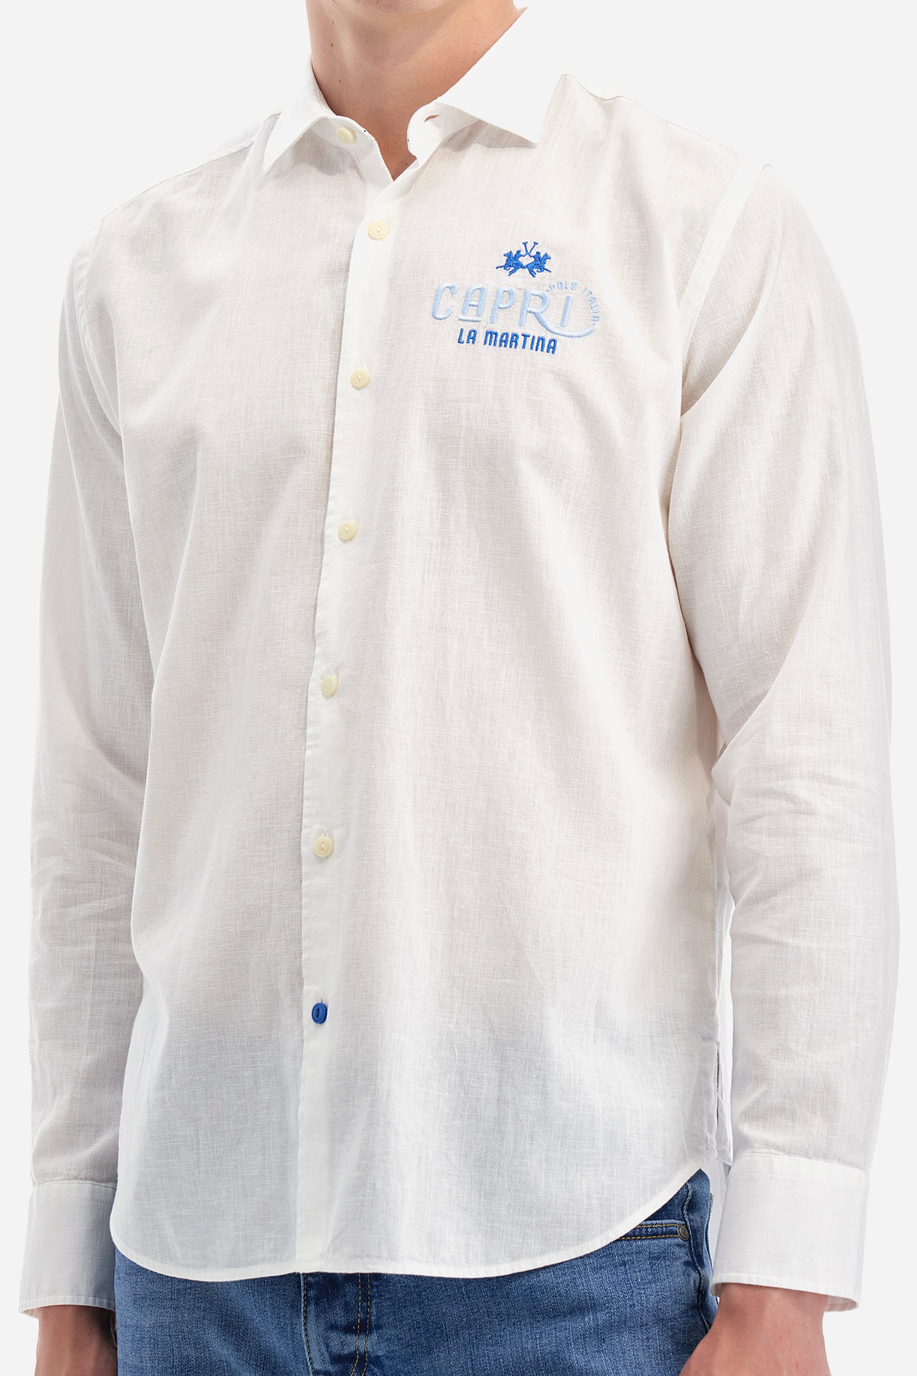 Cotton and linen shirt - Innocent - XLarge sizes | La Martina - Official Online Shop